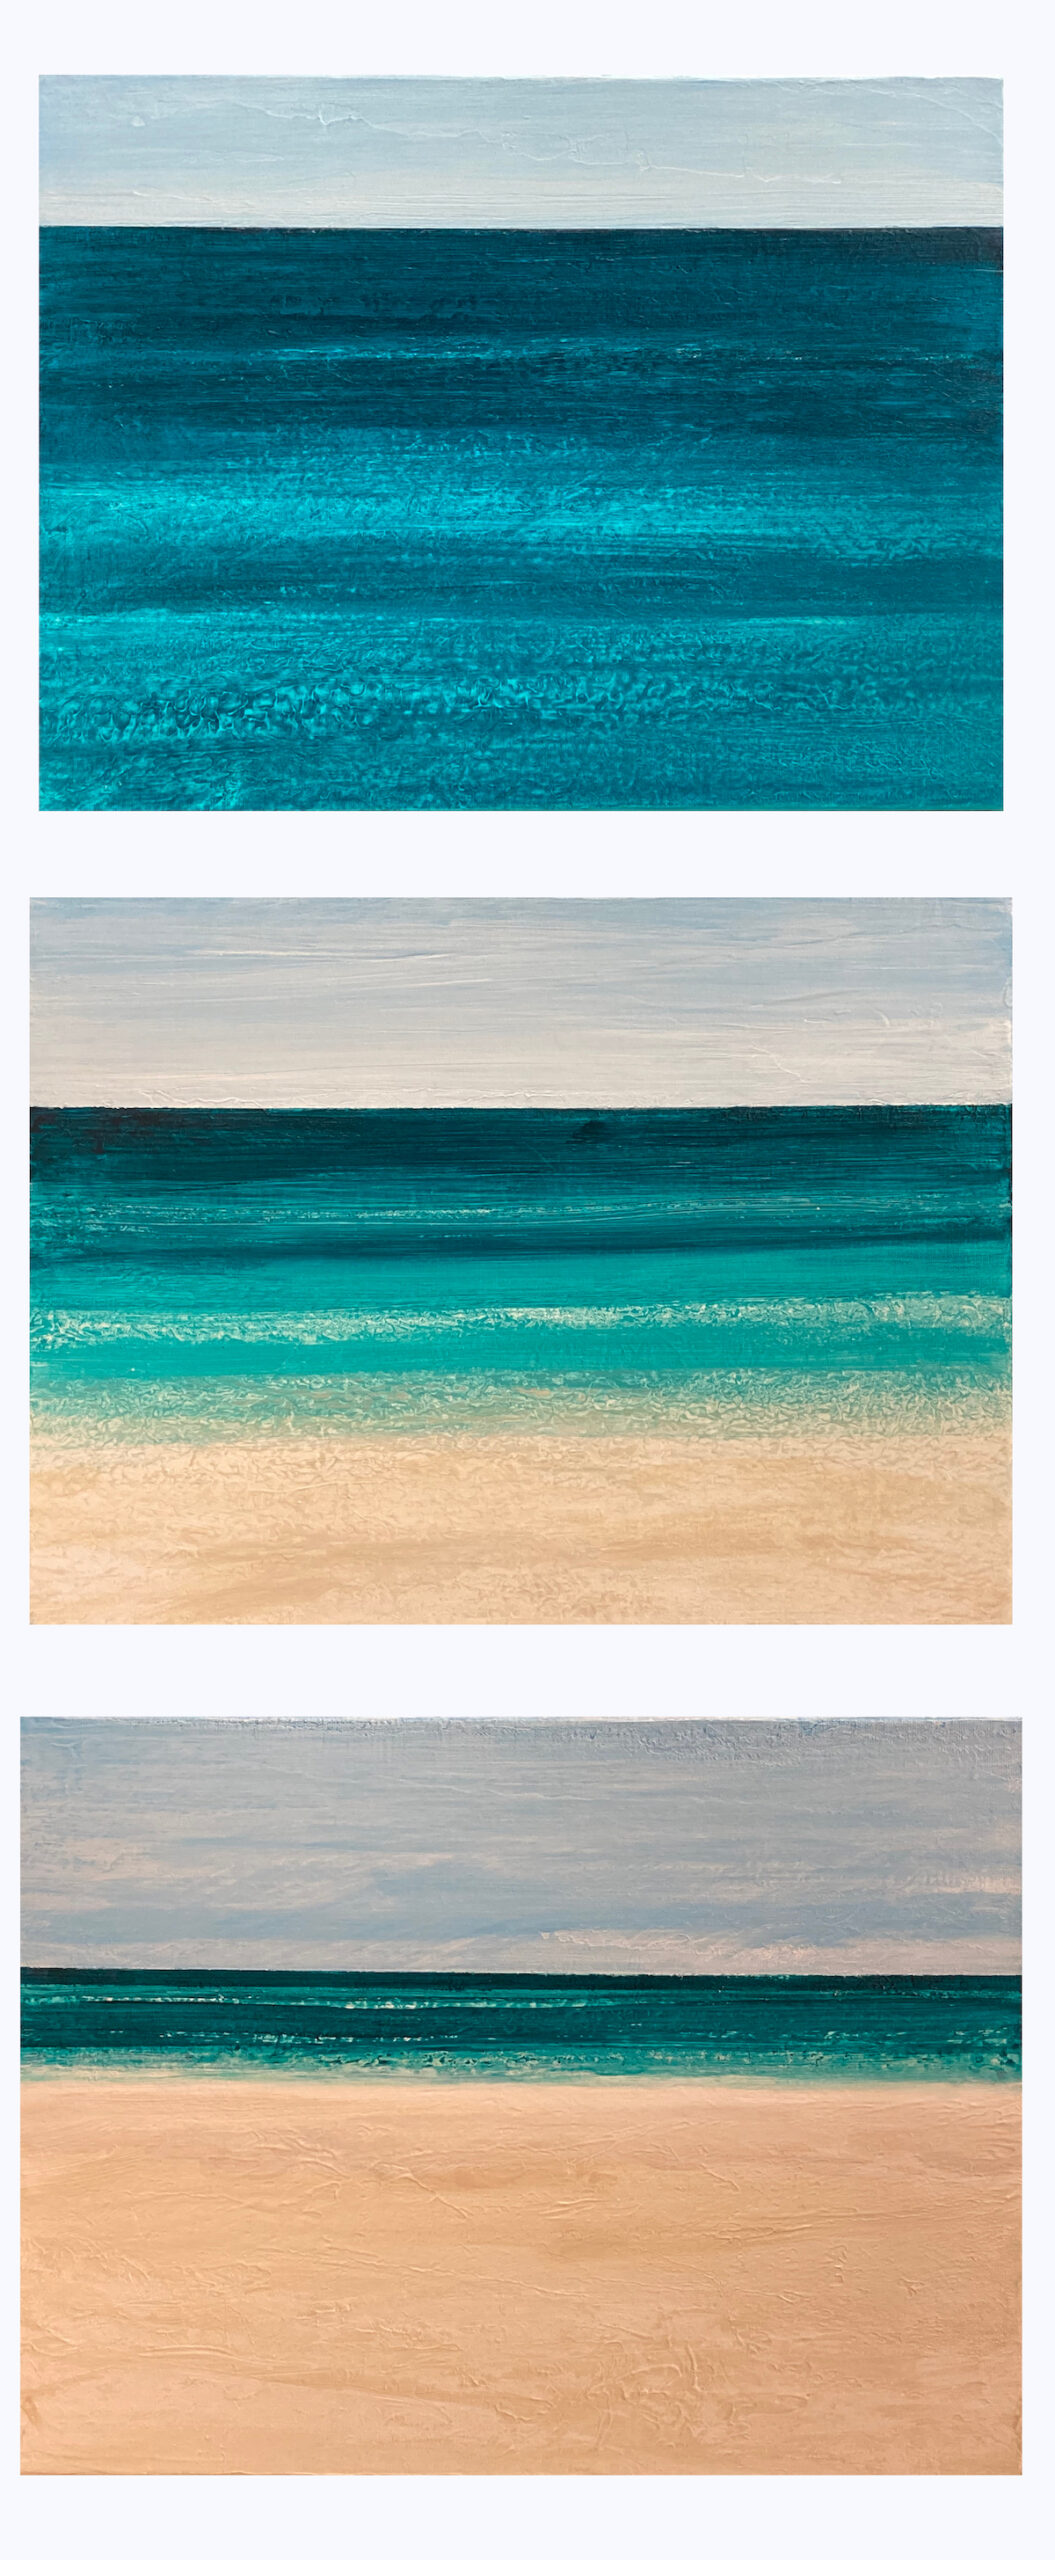 "3 Views of the Gulf, study" 36 x 16, acrylic triptych on canvas